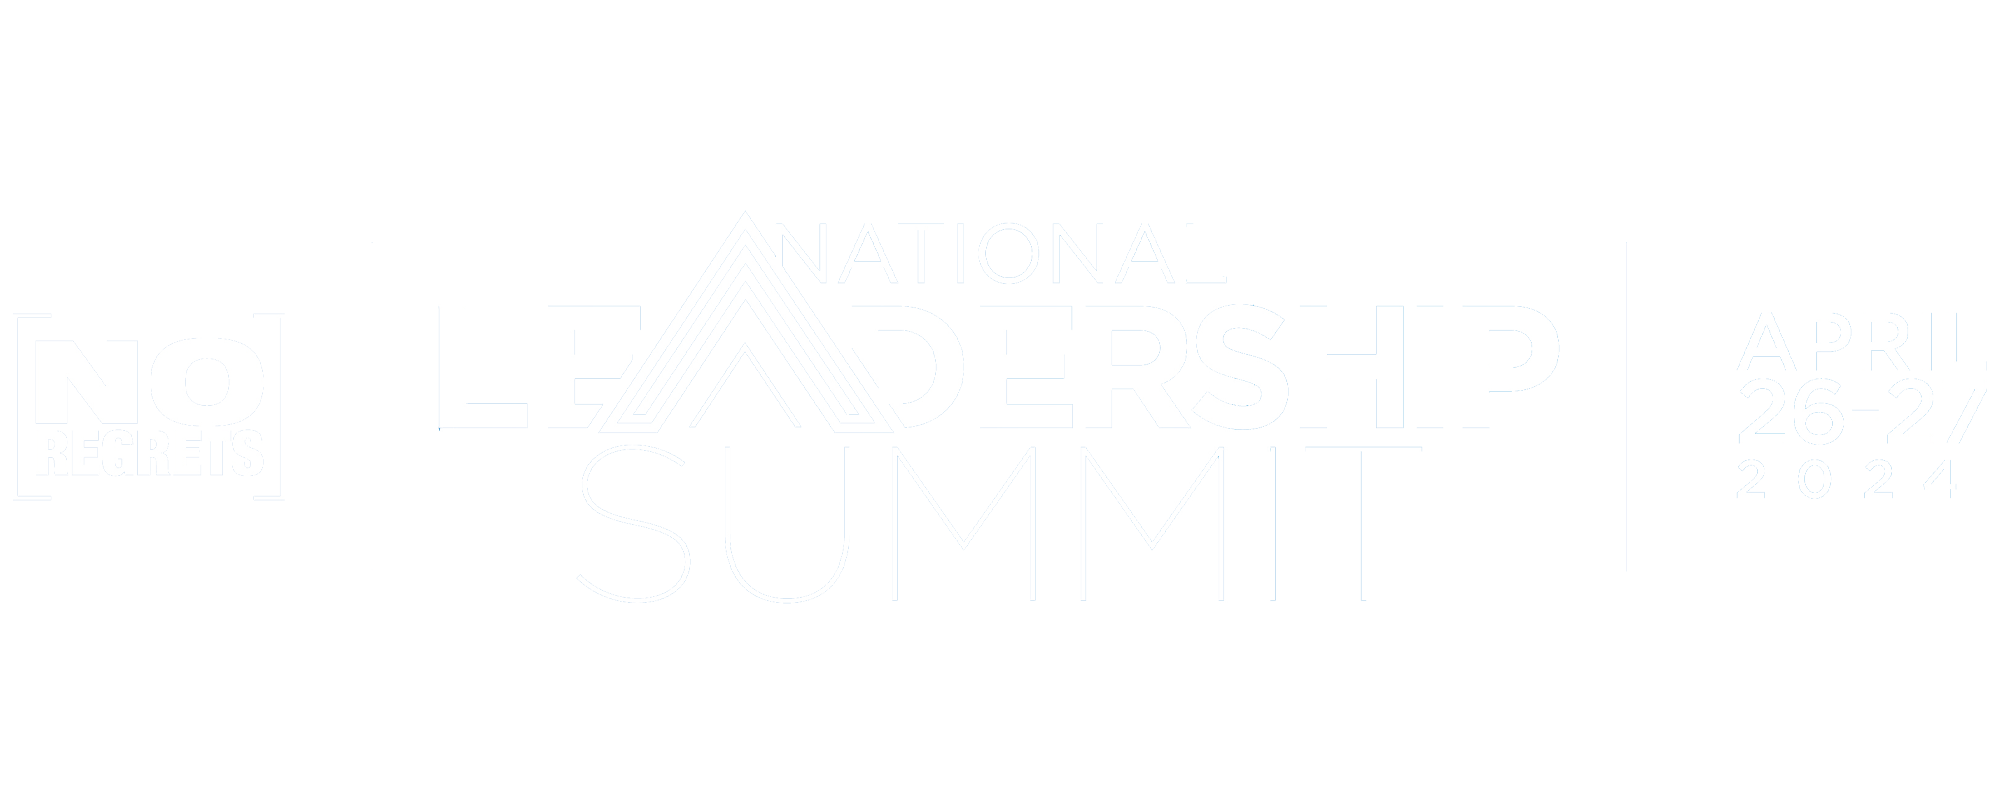 National Leadership Summit Logo